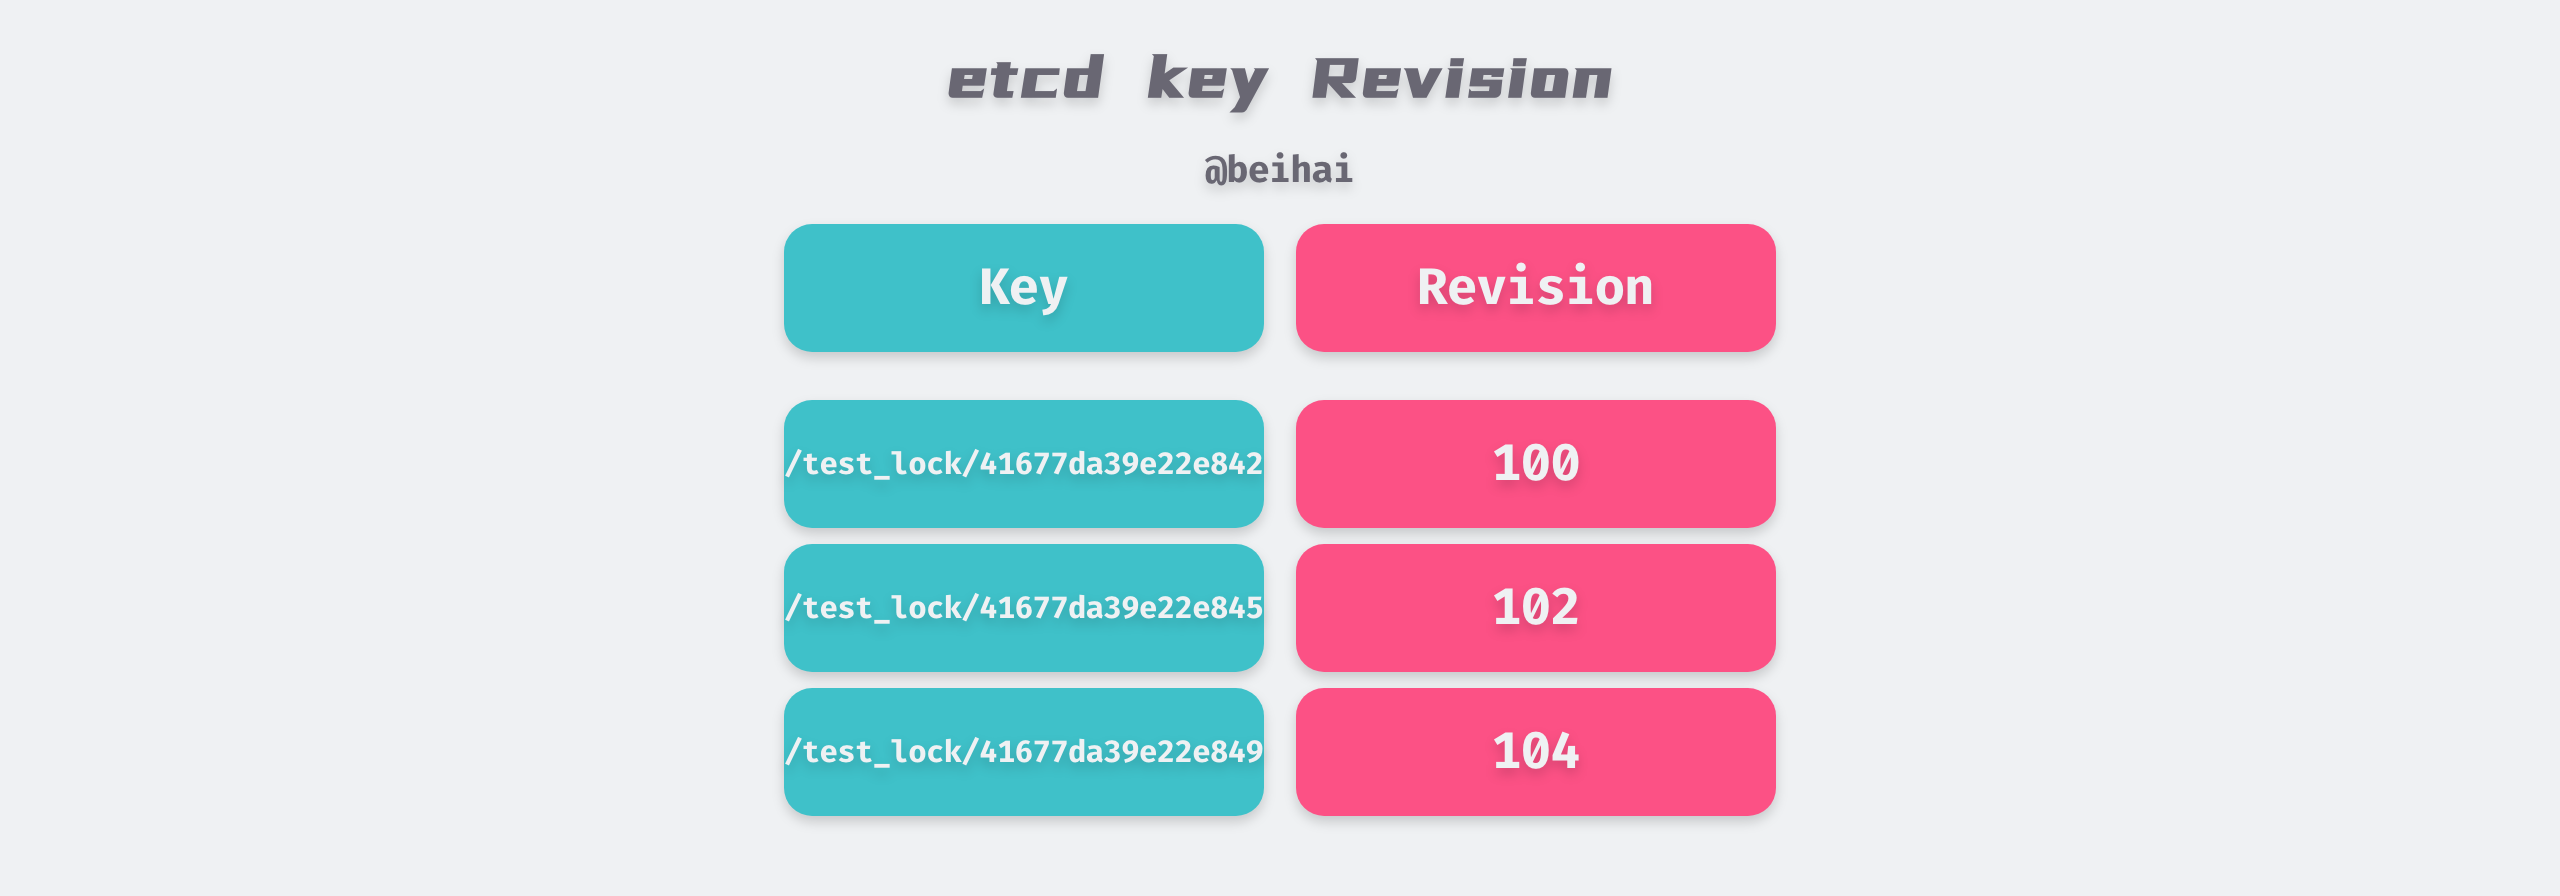 etcd key Revision